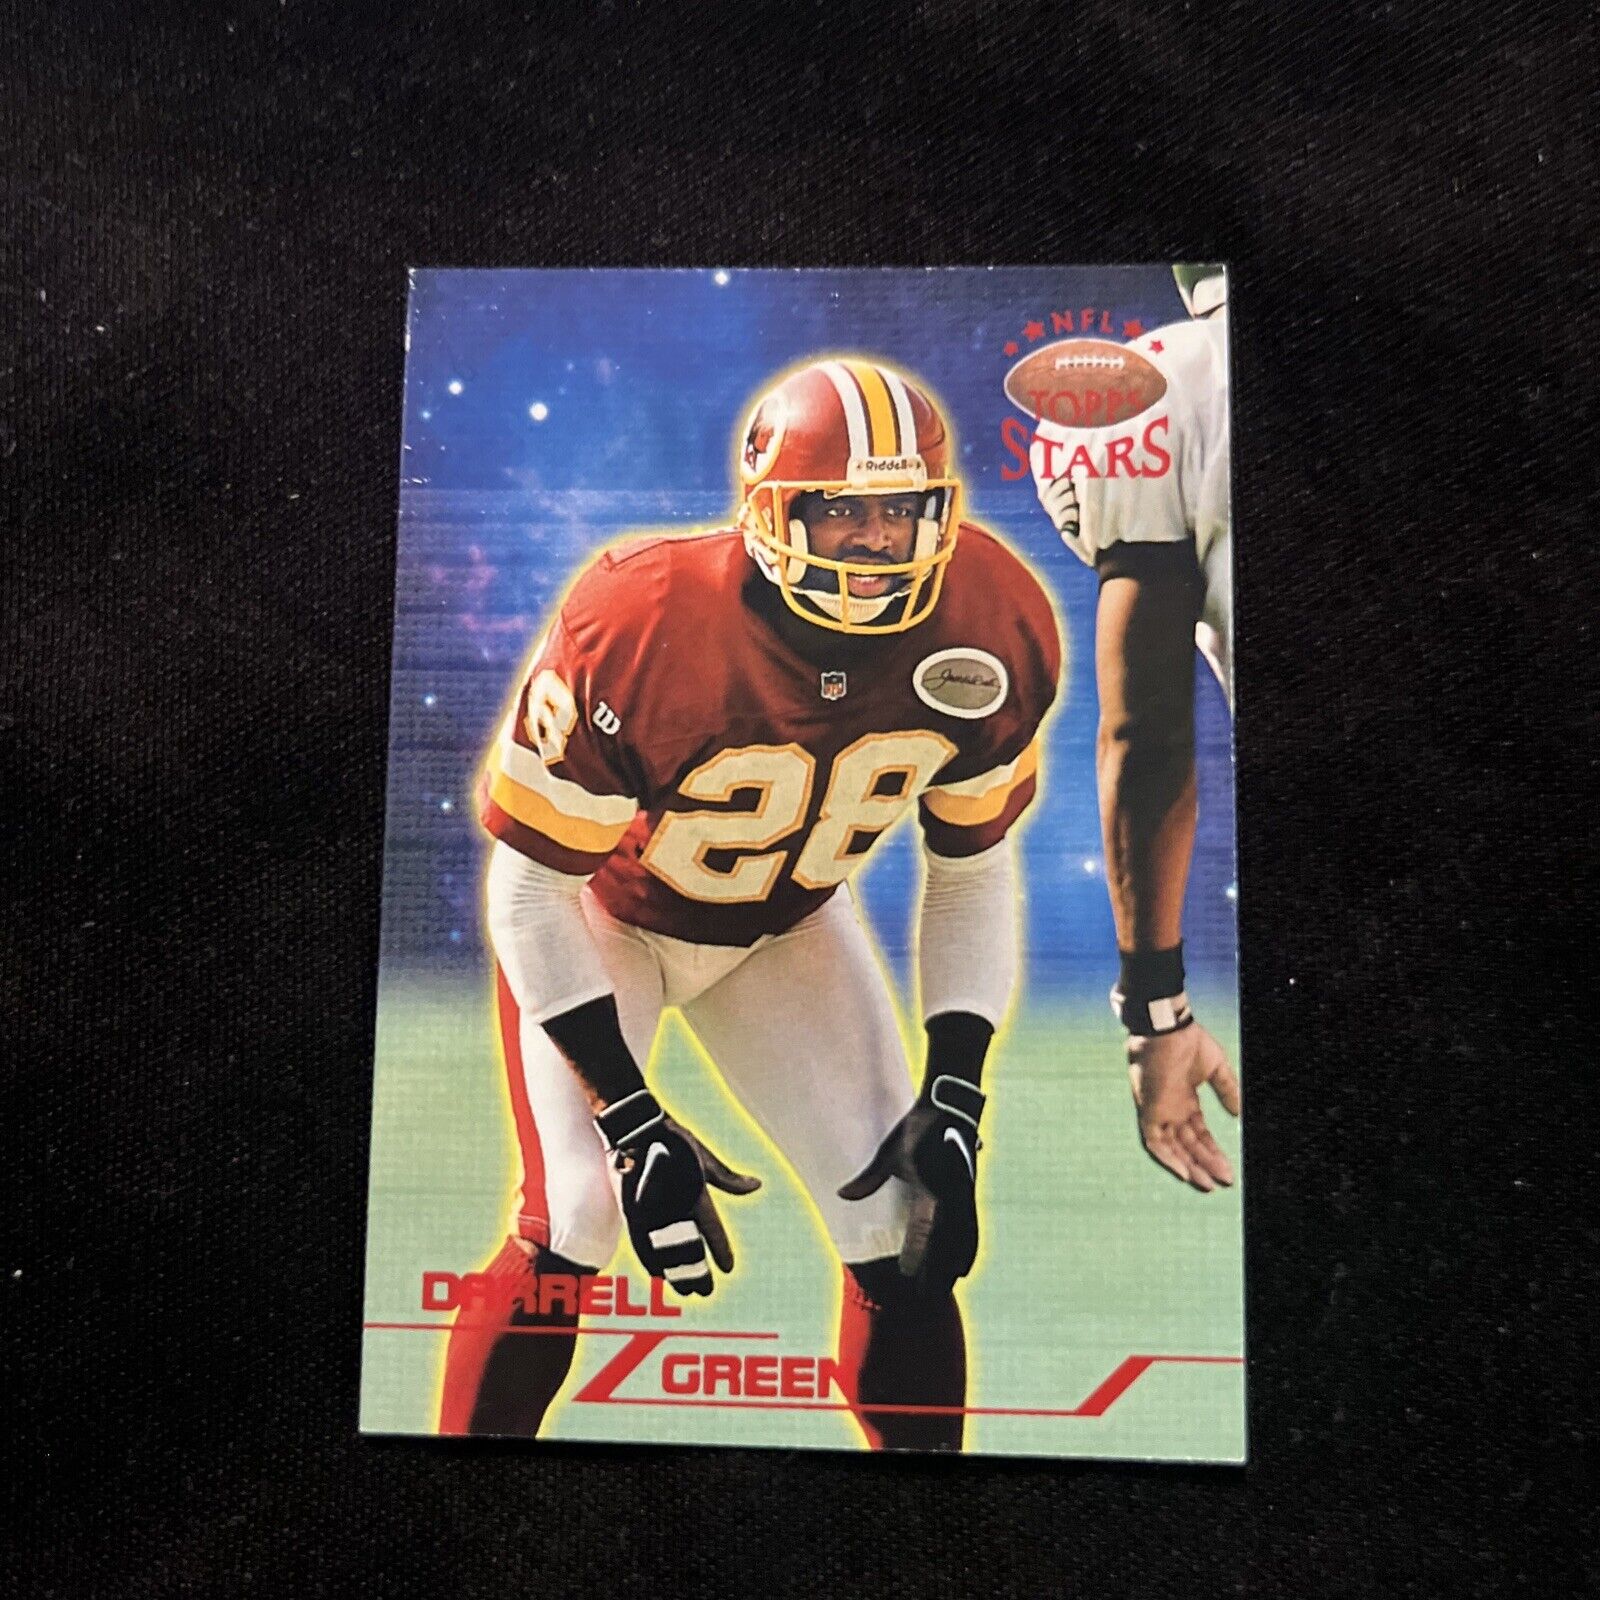 1998 Topps Stars Silver Redskins Football Card #137 Darrell Green 1134 /3999